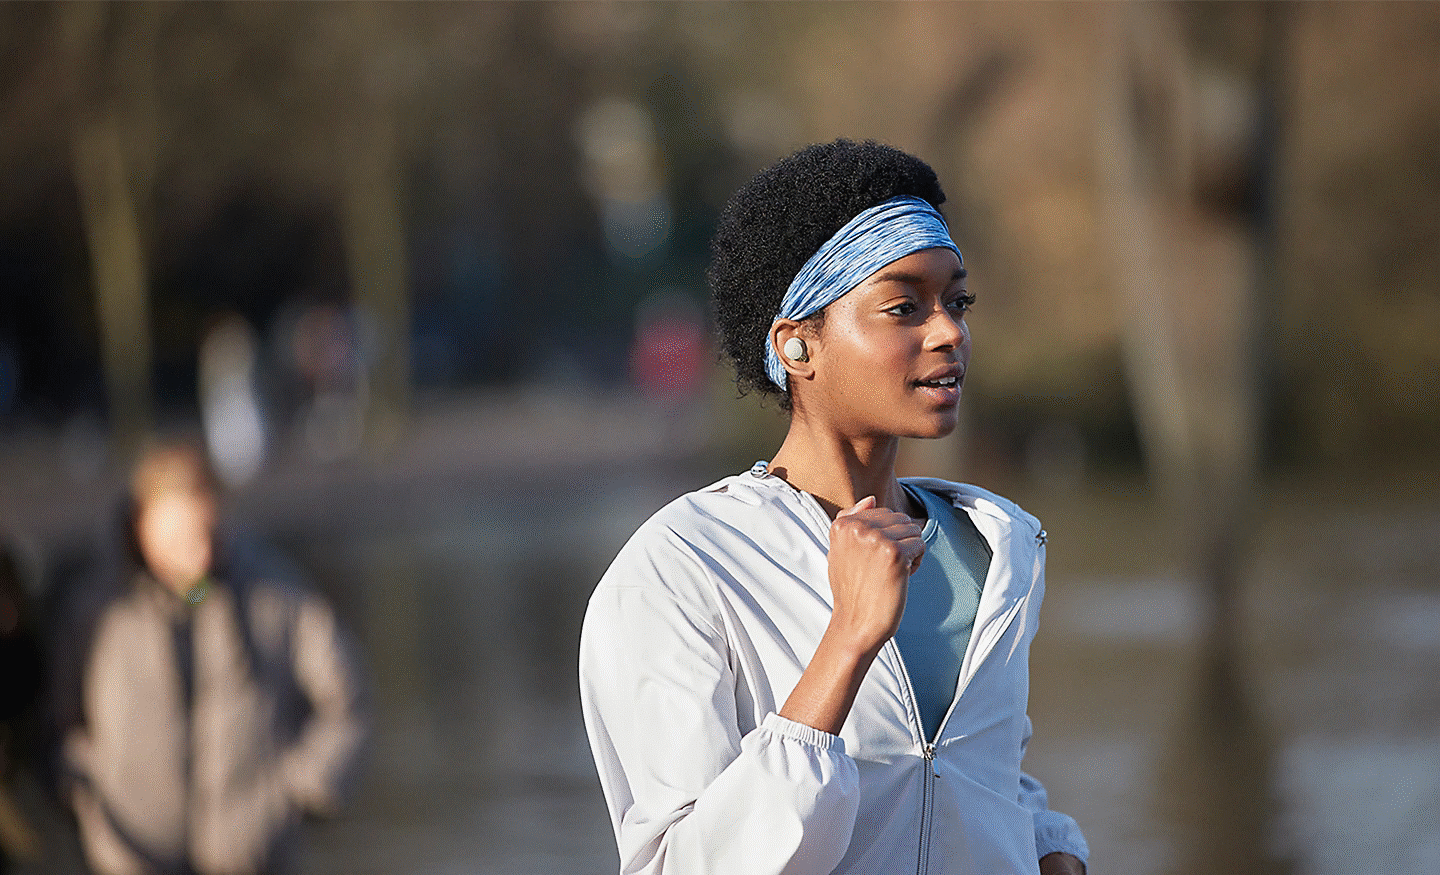 A woman running outdoors wearing WF-1000XM4 headphones